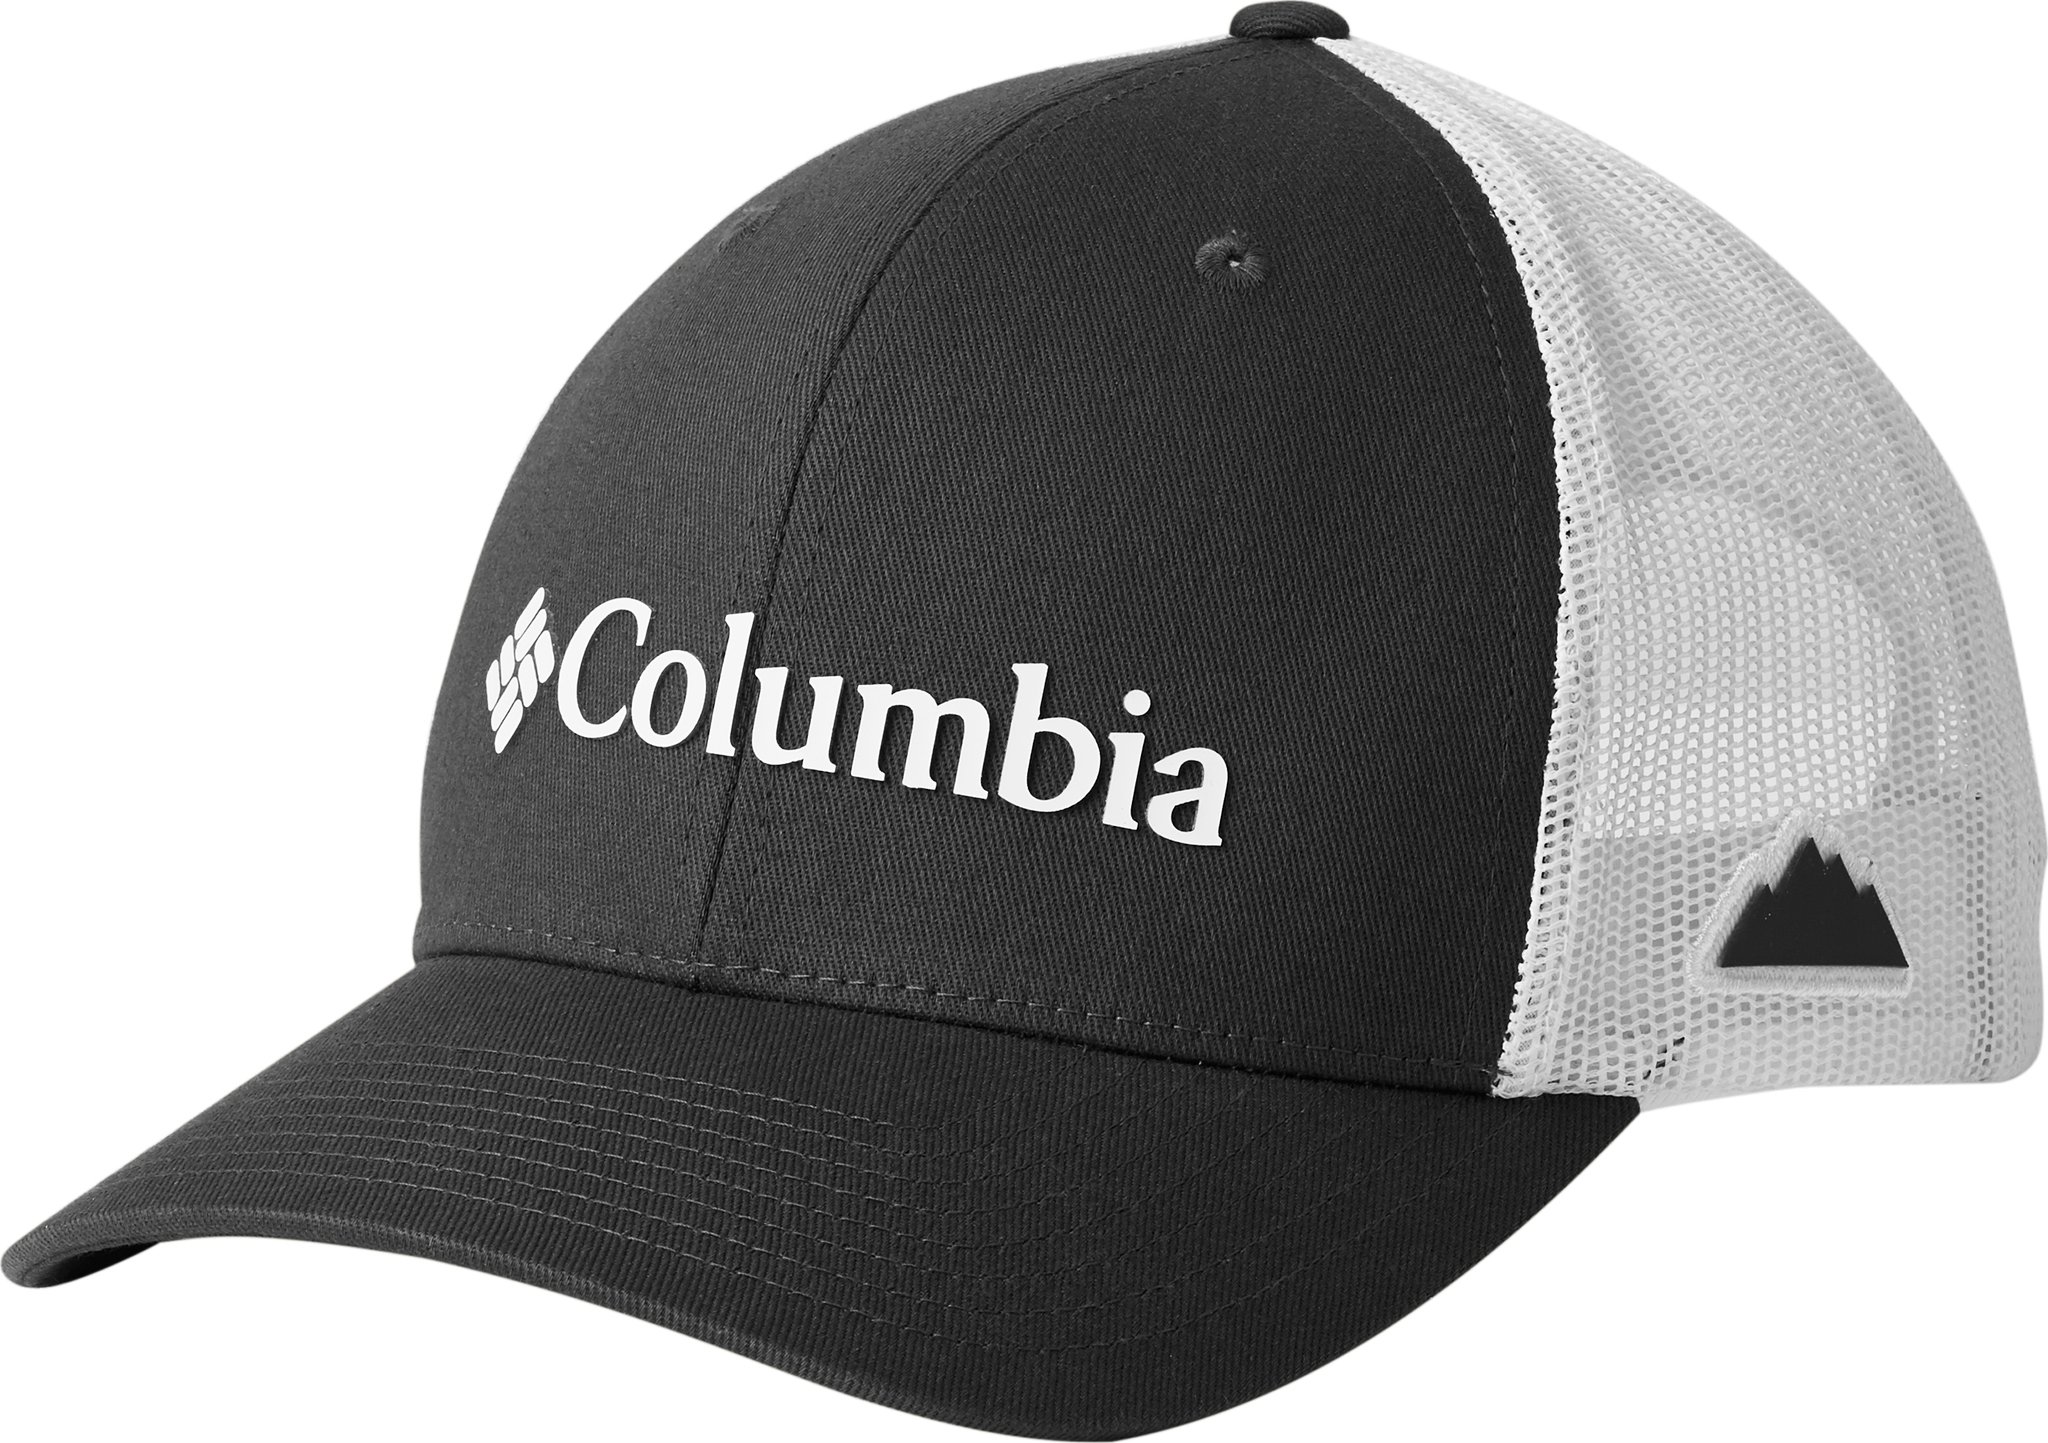 Columbia Columbia Mesh Snap Back Ball Cap - Men's